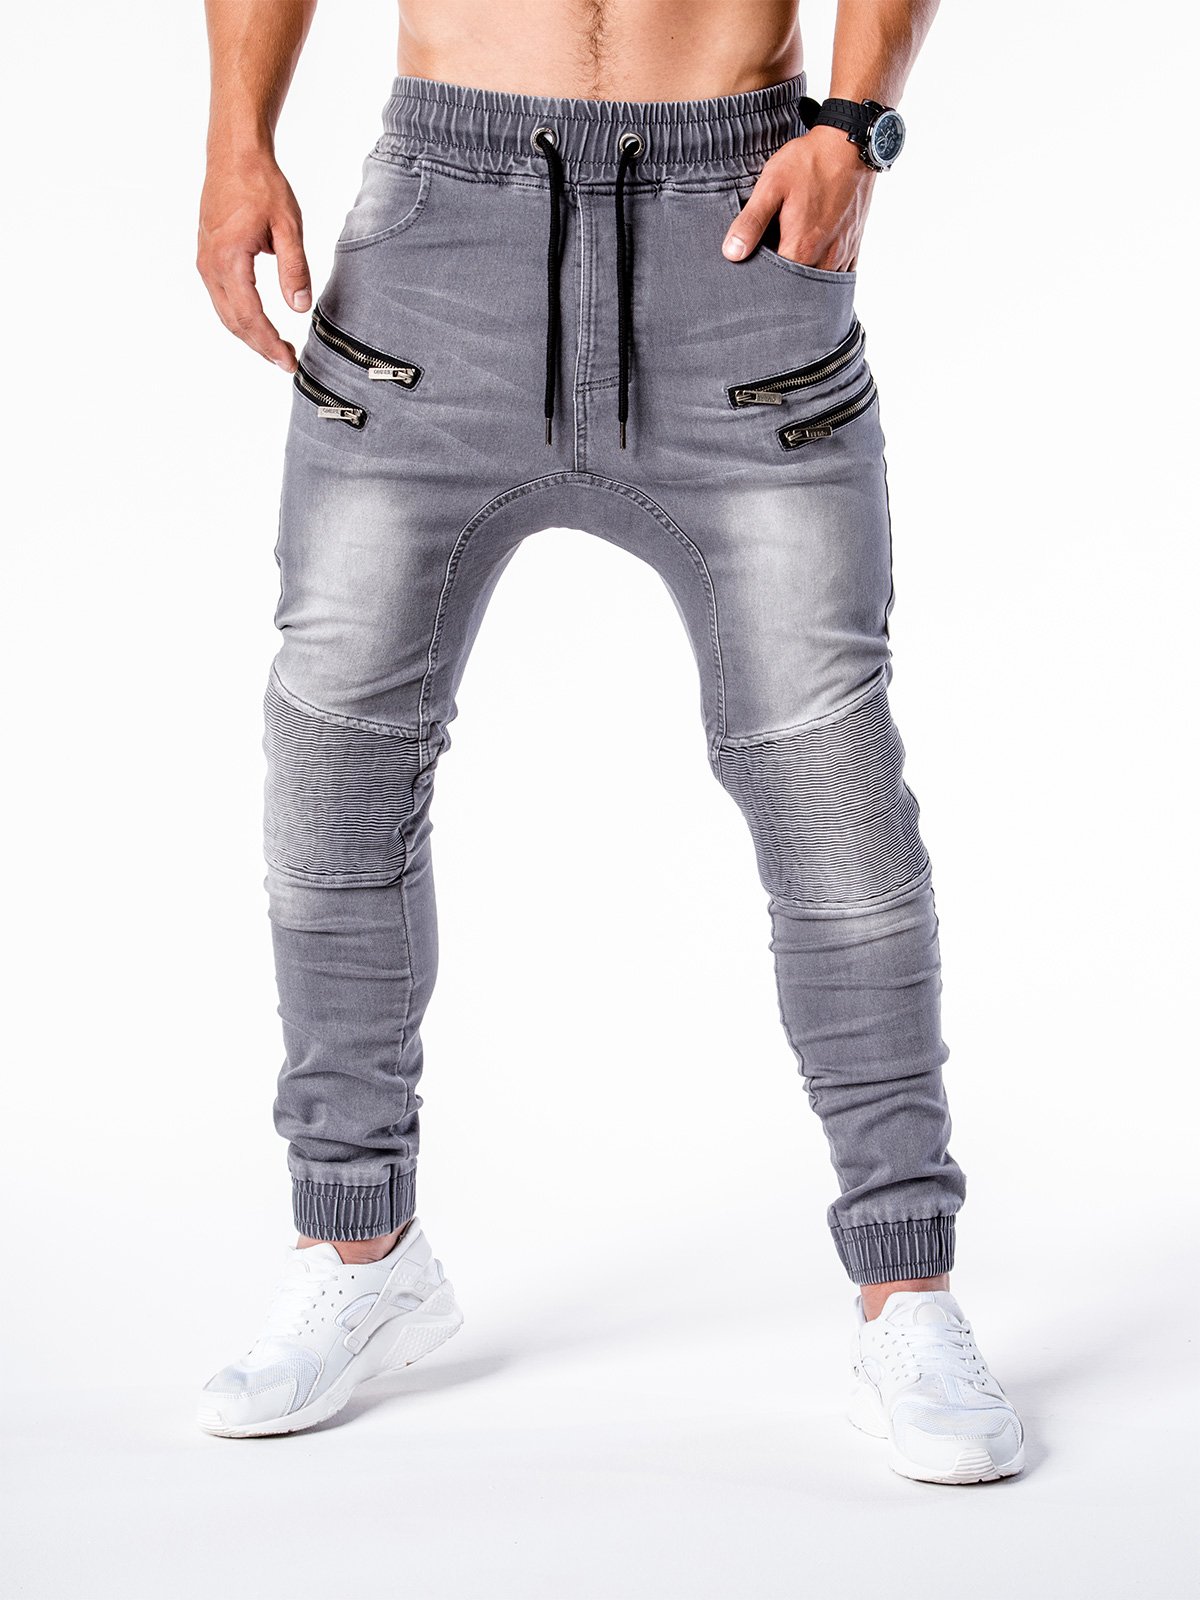 Men's jeans joggers P405 - grey | MODONE wholesale - Clothing For Men